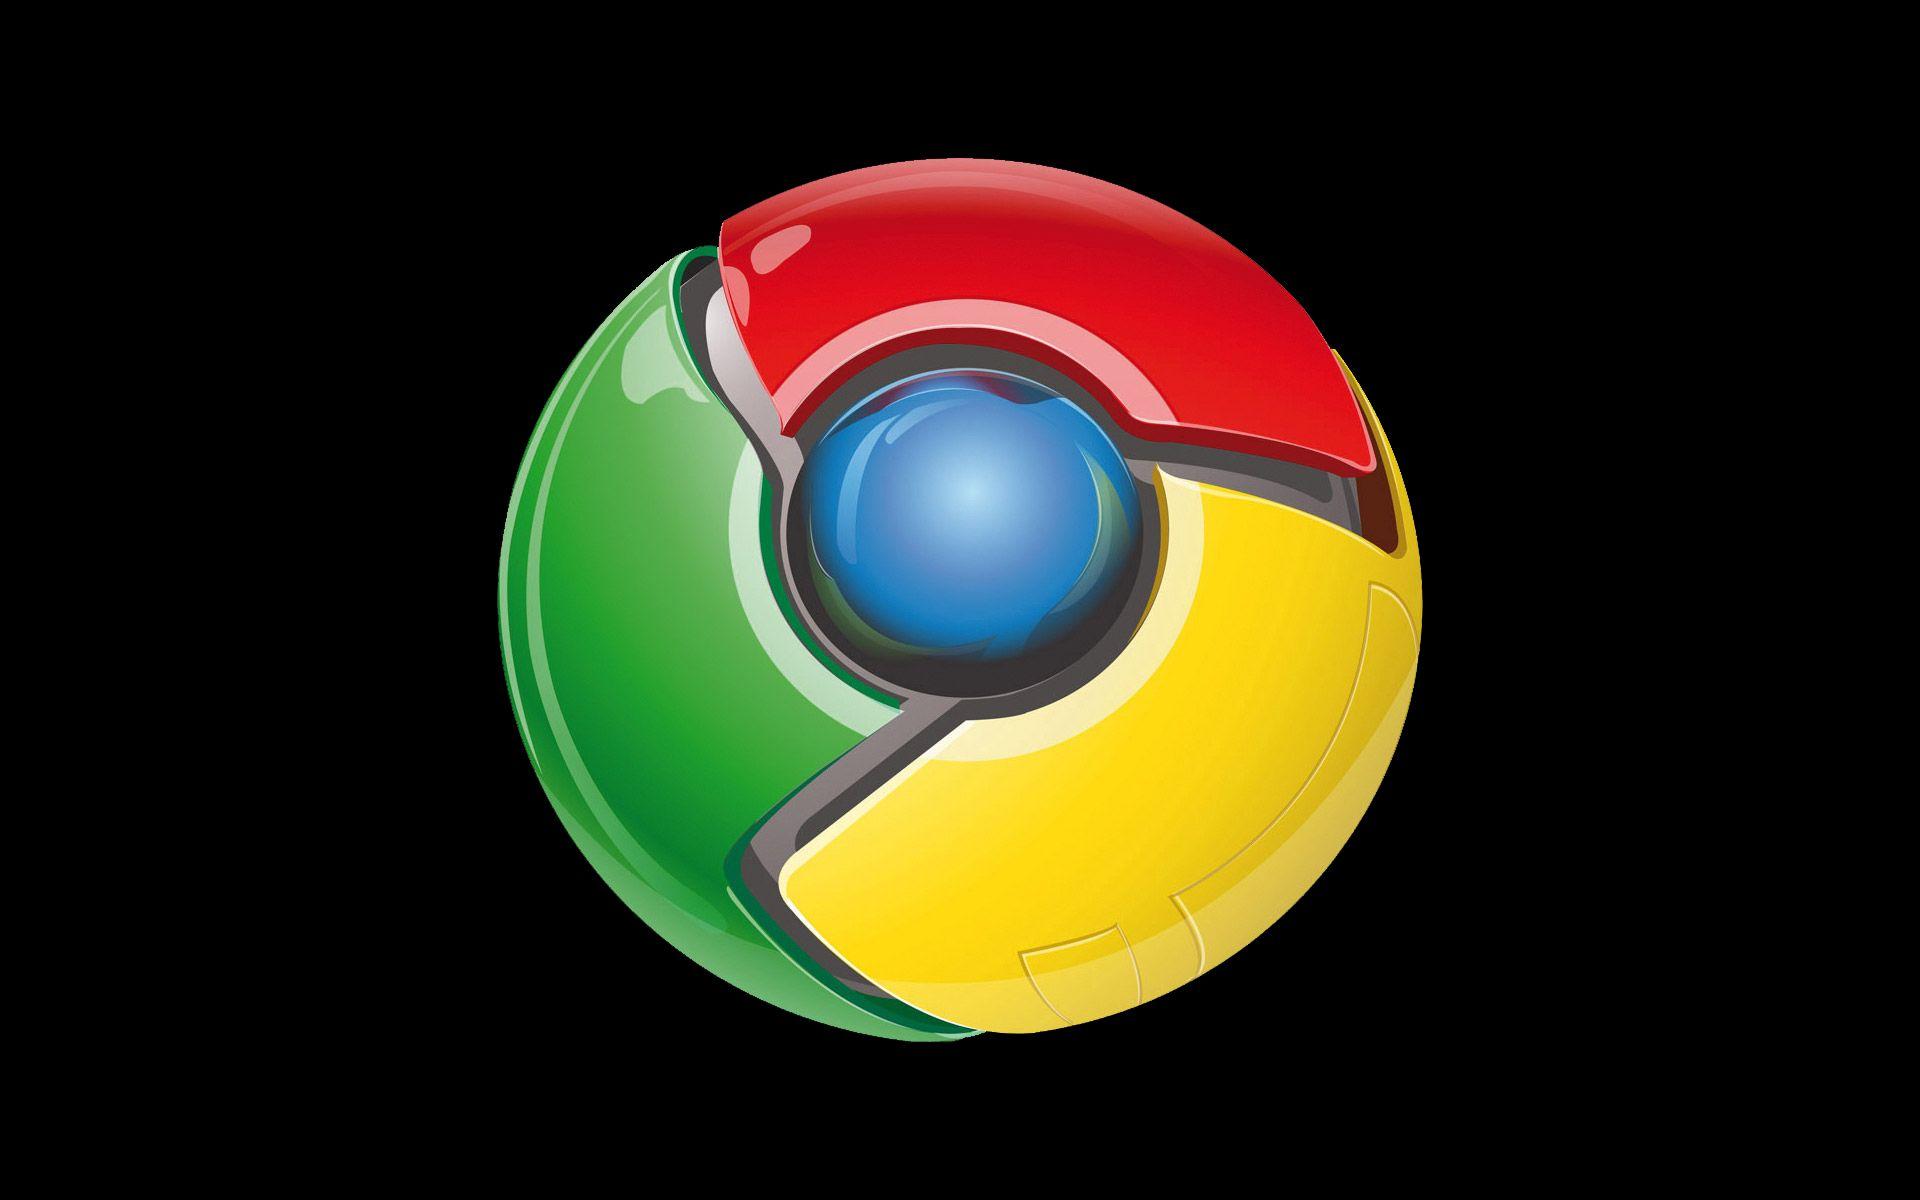 Original Chrome Logo - Amazing-Chrome-Wallpapers-HD | wallpaper.wiki